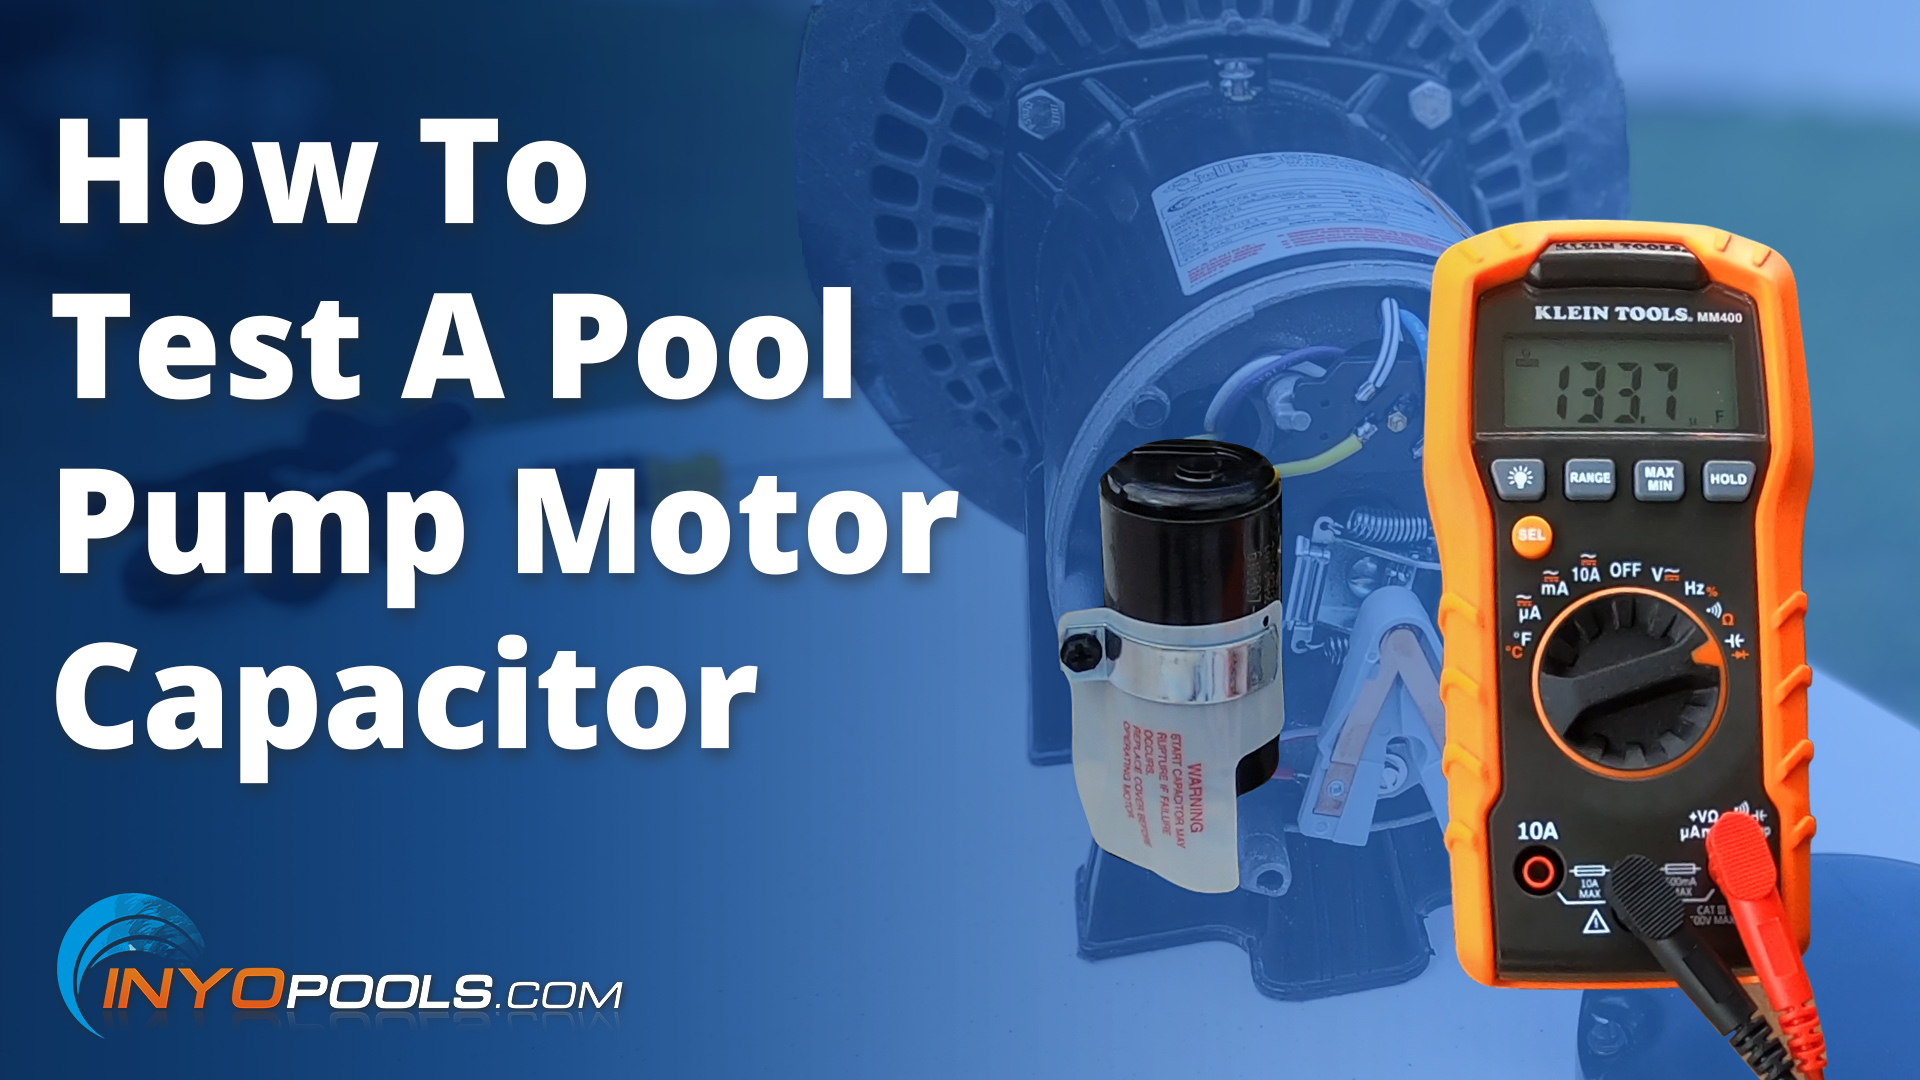 How To Test A Pool Pump Motor Capacitor - INYOPools.com - DIY ...